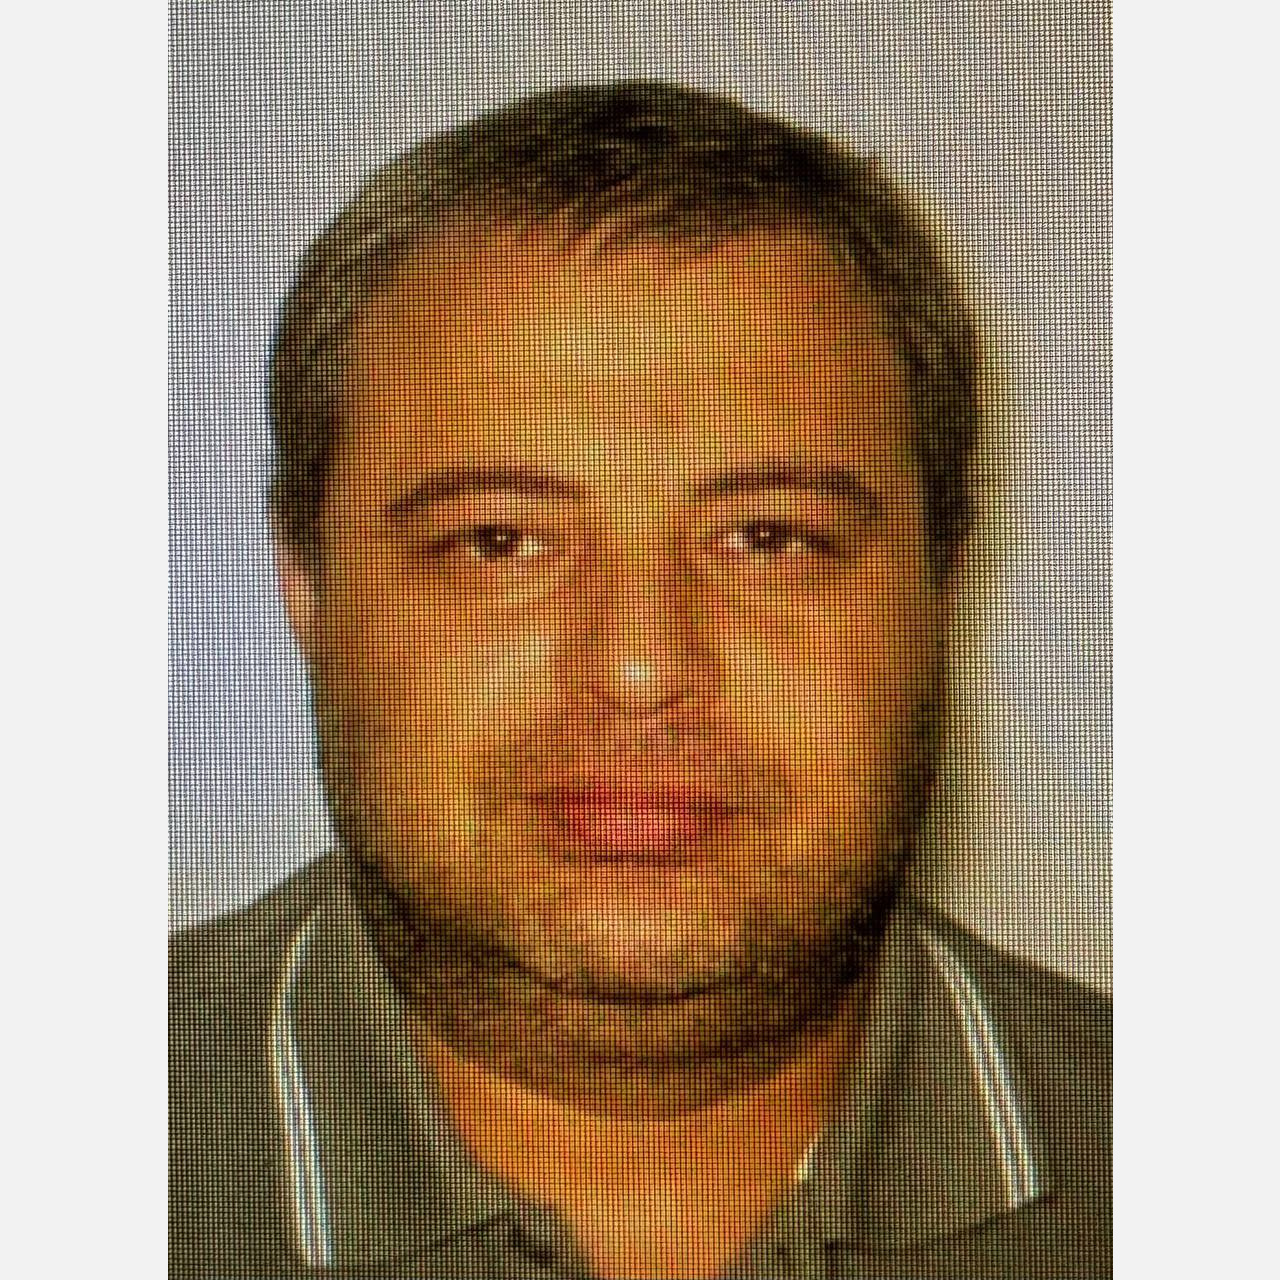 Полиция разыскивает в Армавире подозреваемого в мошенничестве Ахмеда Магомедгаджиевича Алхасова